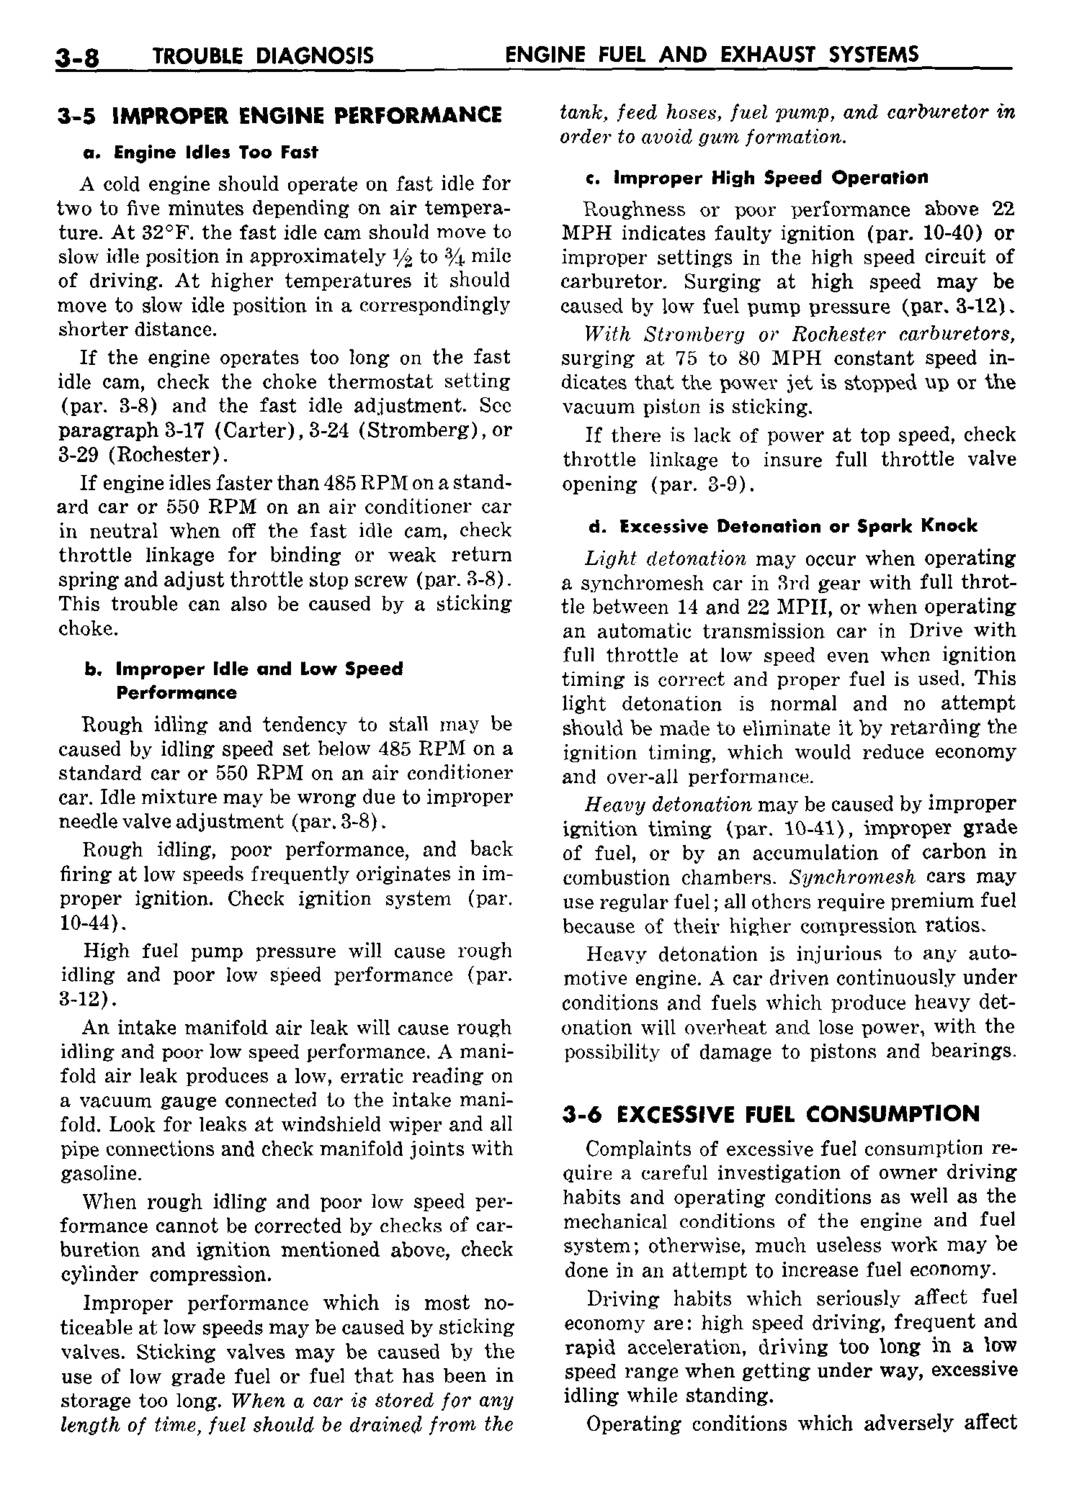 n_04 1959 Buick Shop Manual - Engine Fuel & Exhaust-008-008.jpg